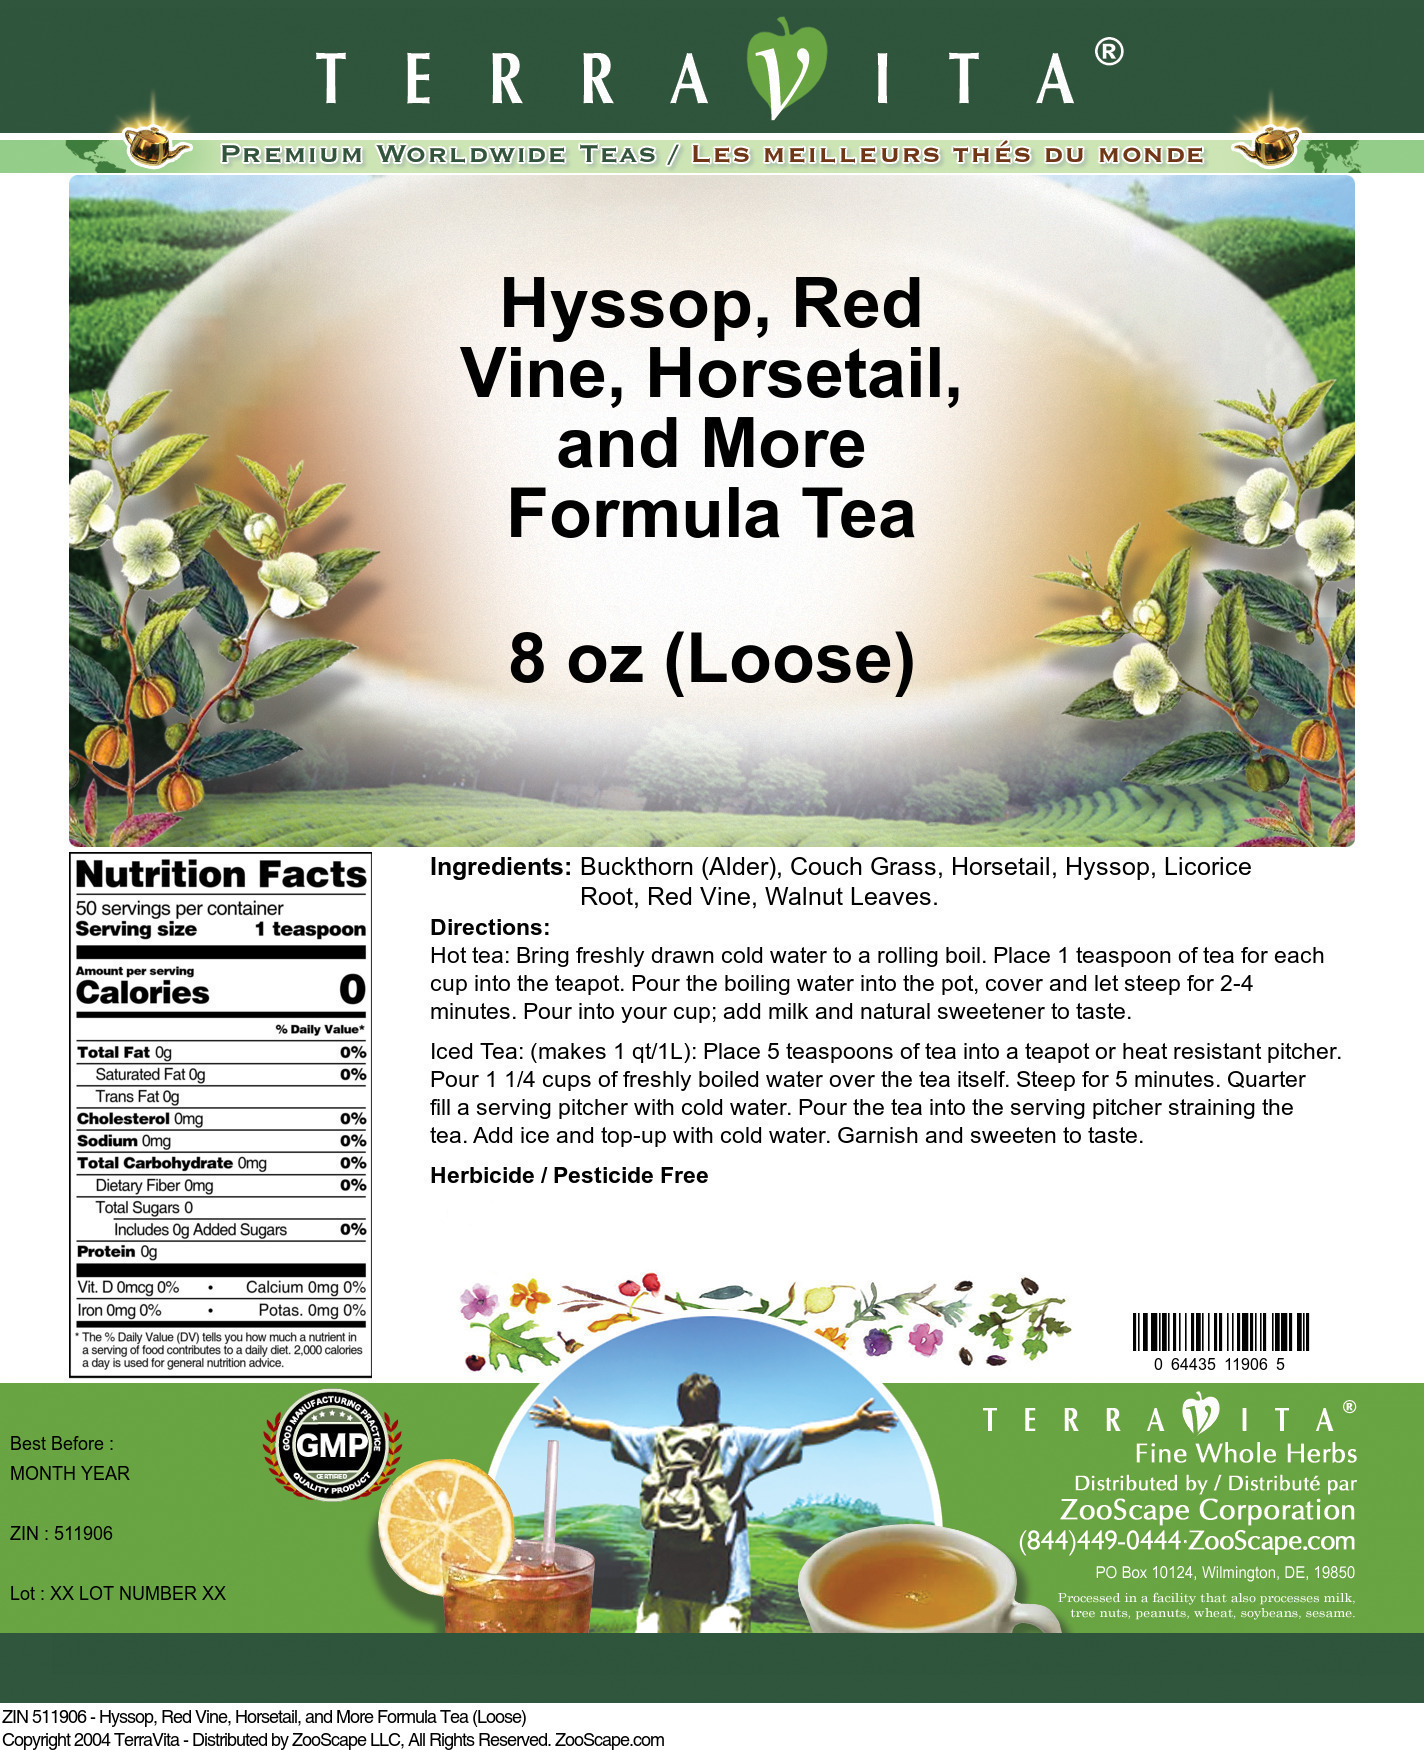 Hyssop, Red Vine, Horsetail, and More Formula Tea (Loose) - Label